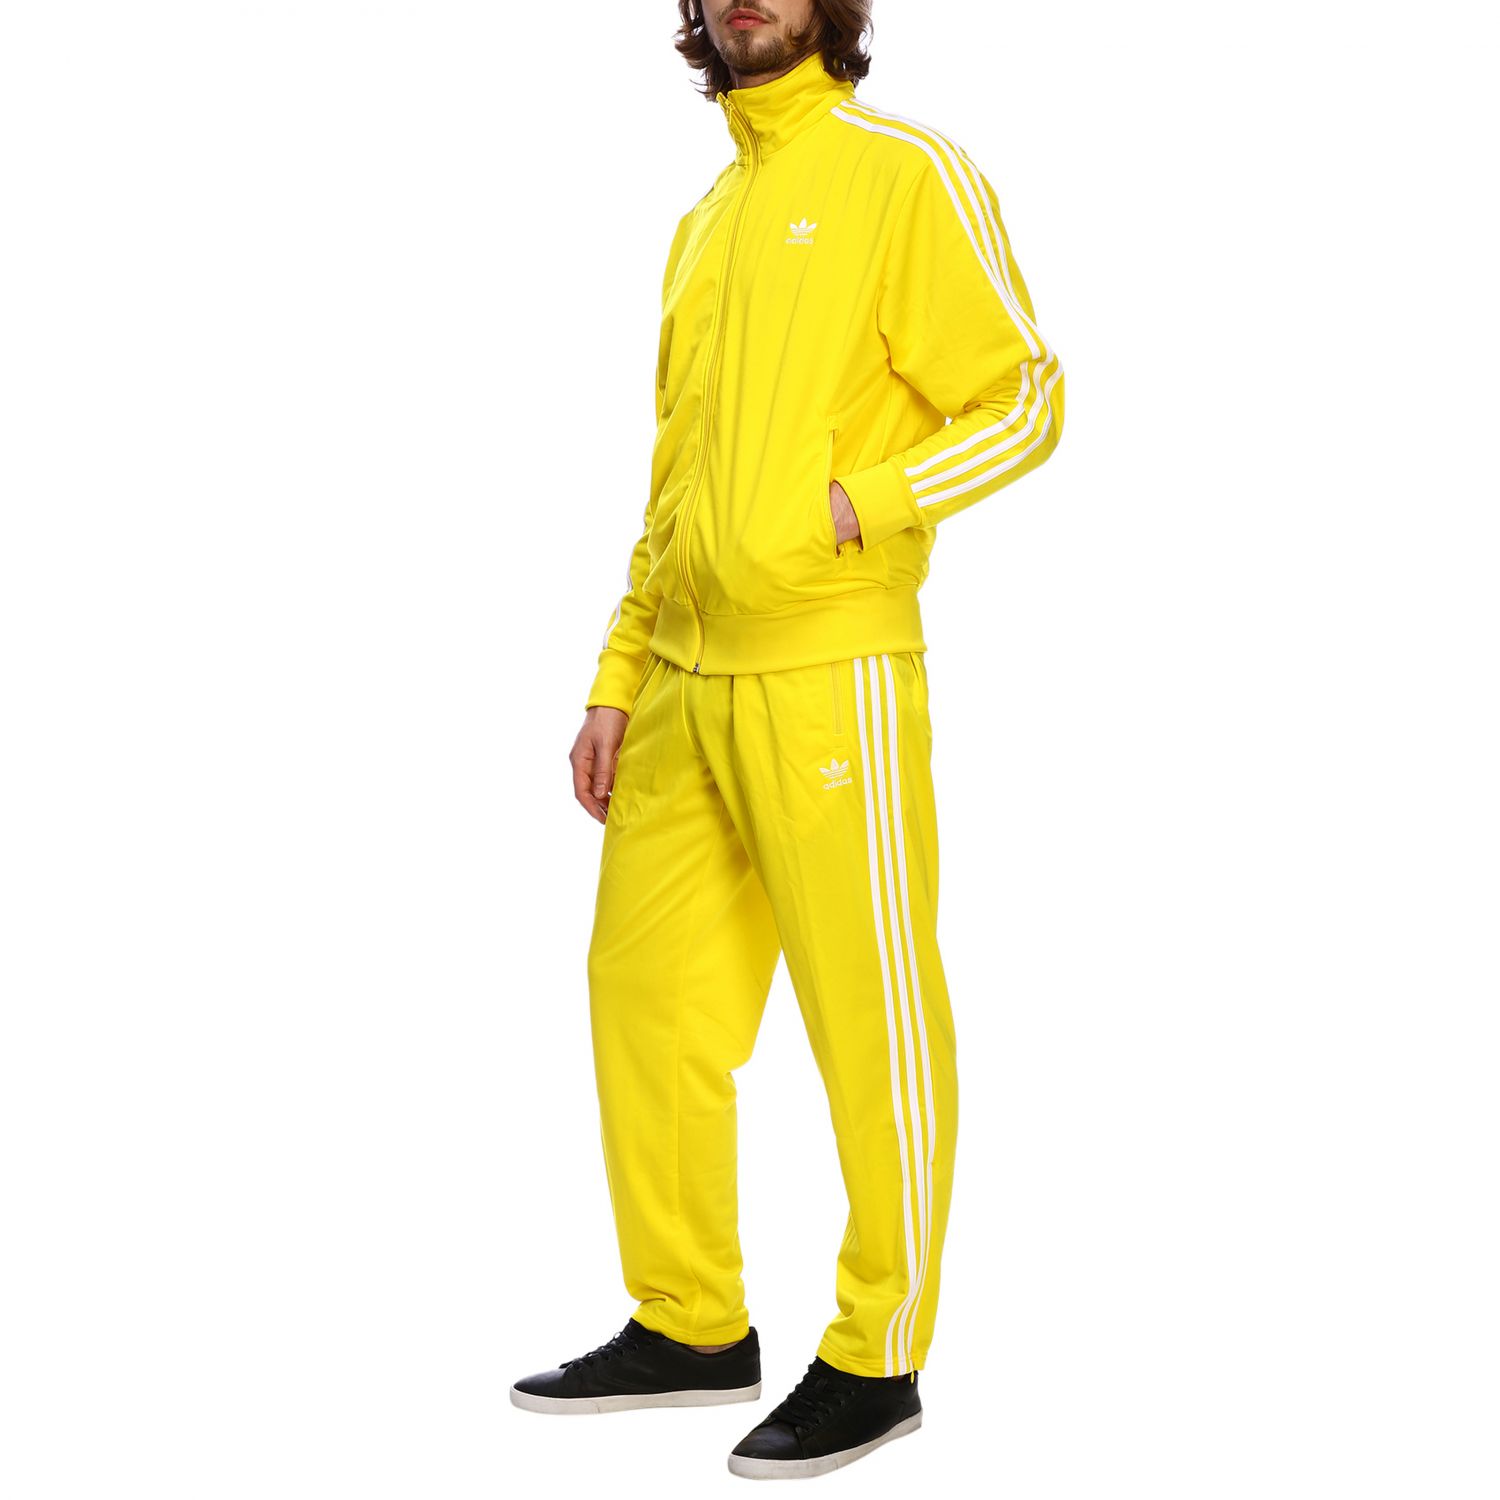 Adidas Originals Outlet: Pants men | Pants Adidas Originals Men Yellow ...